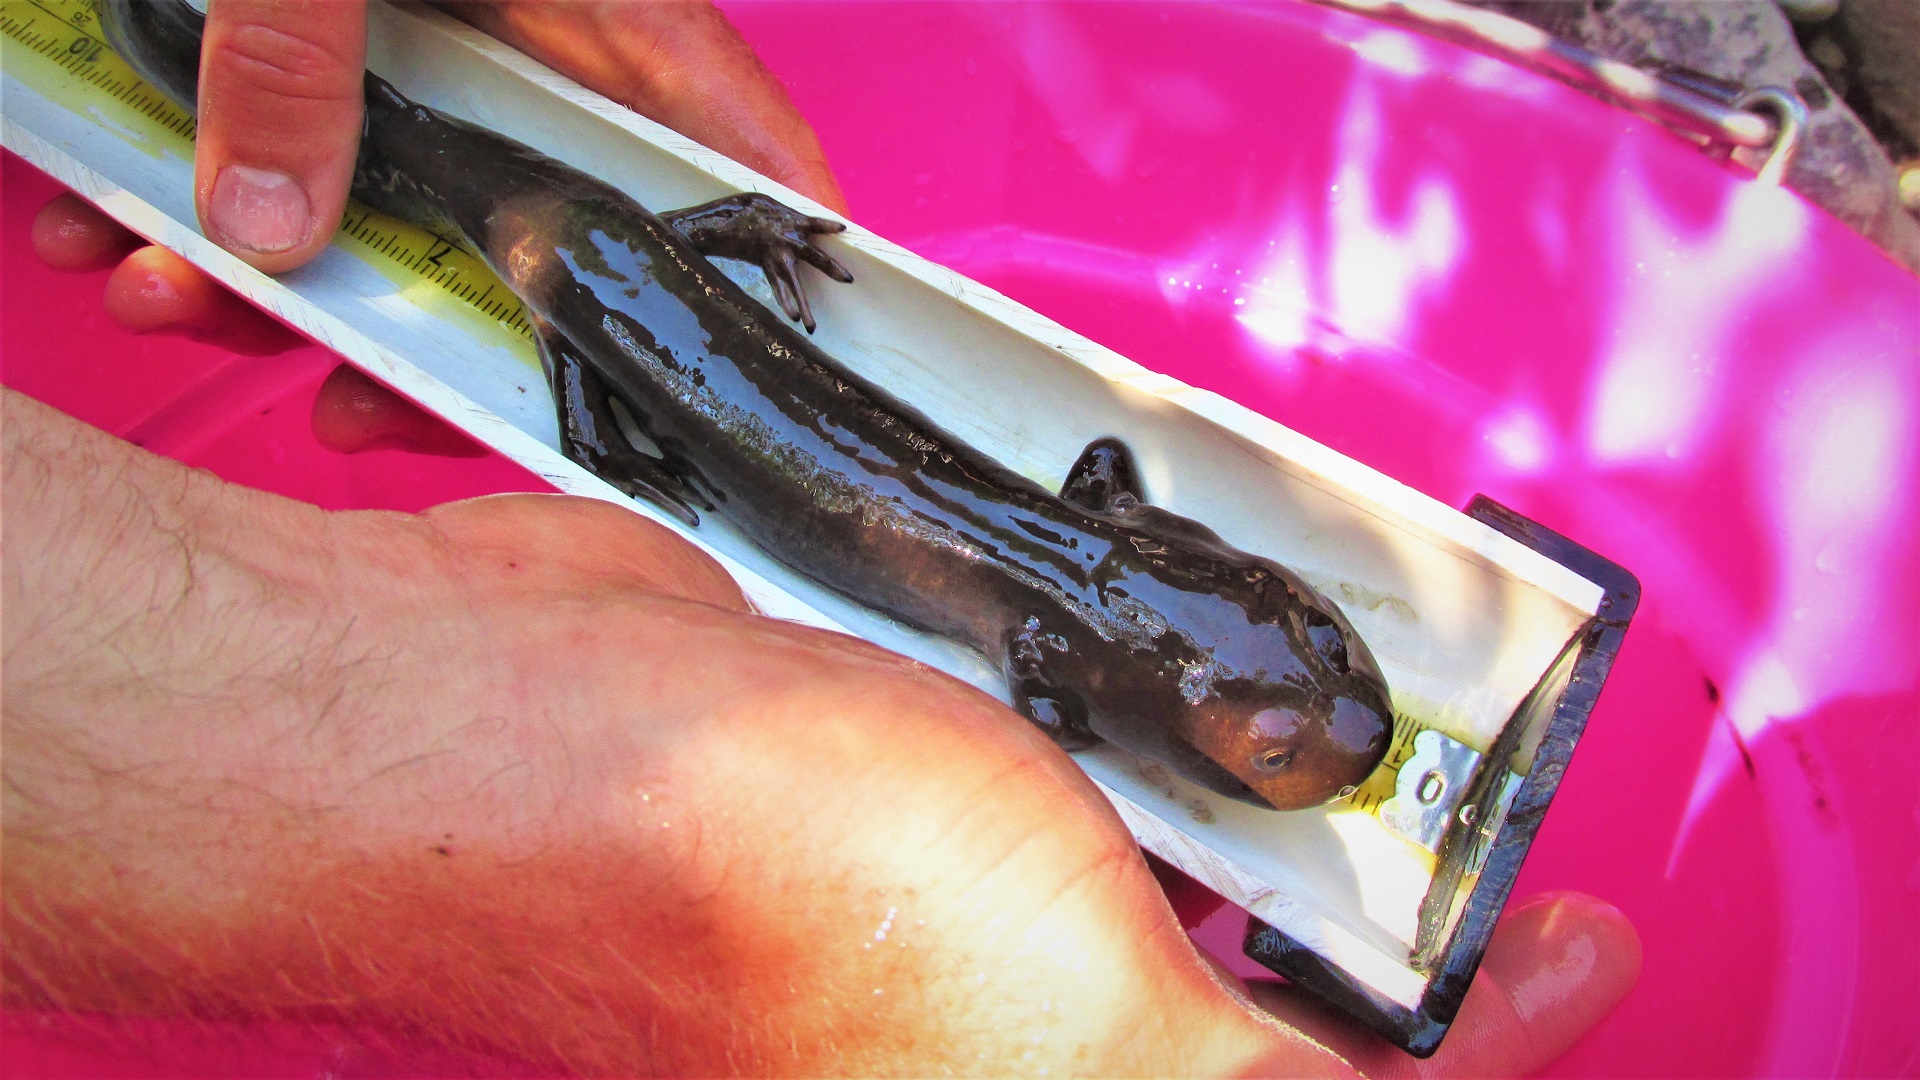 A brown, shiny salamander lies on a measuring board